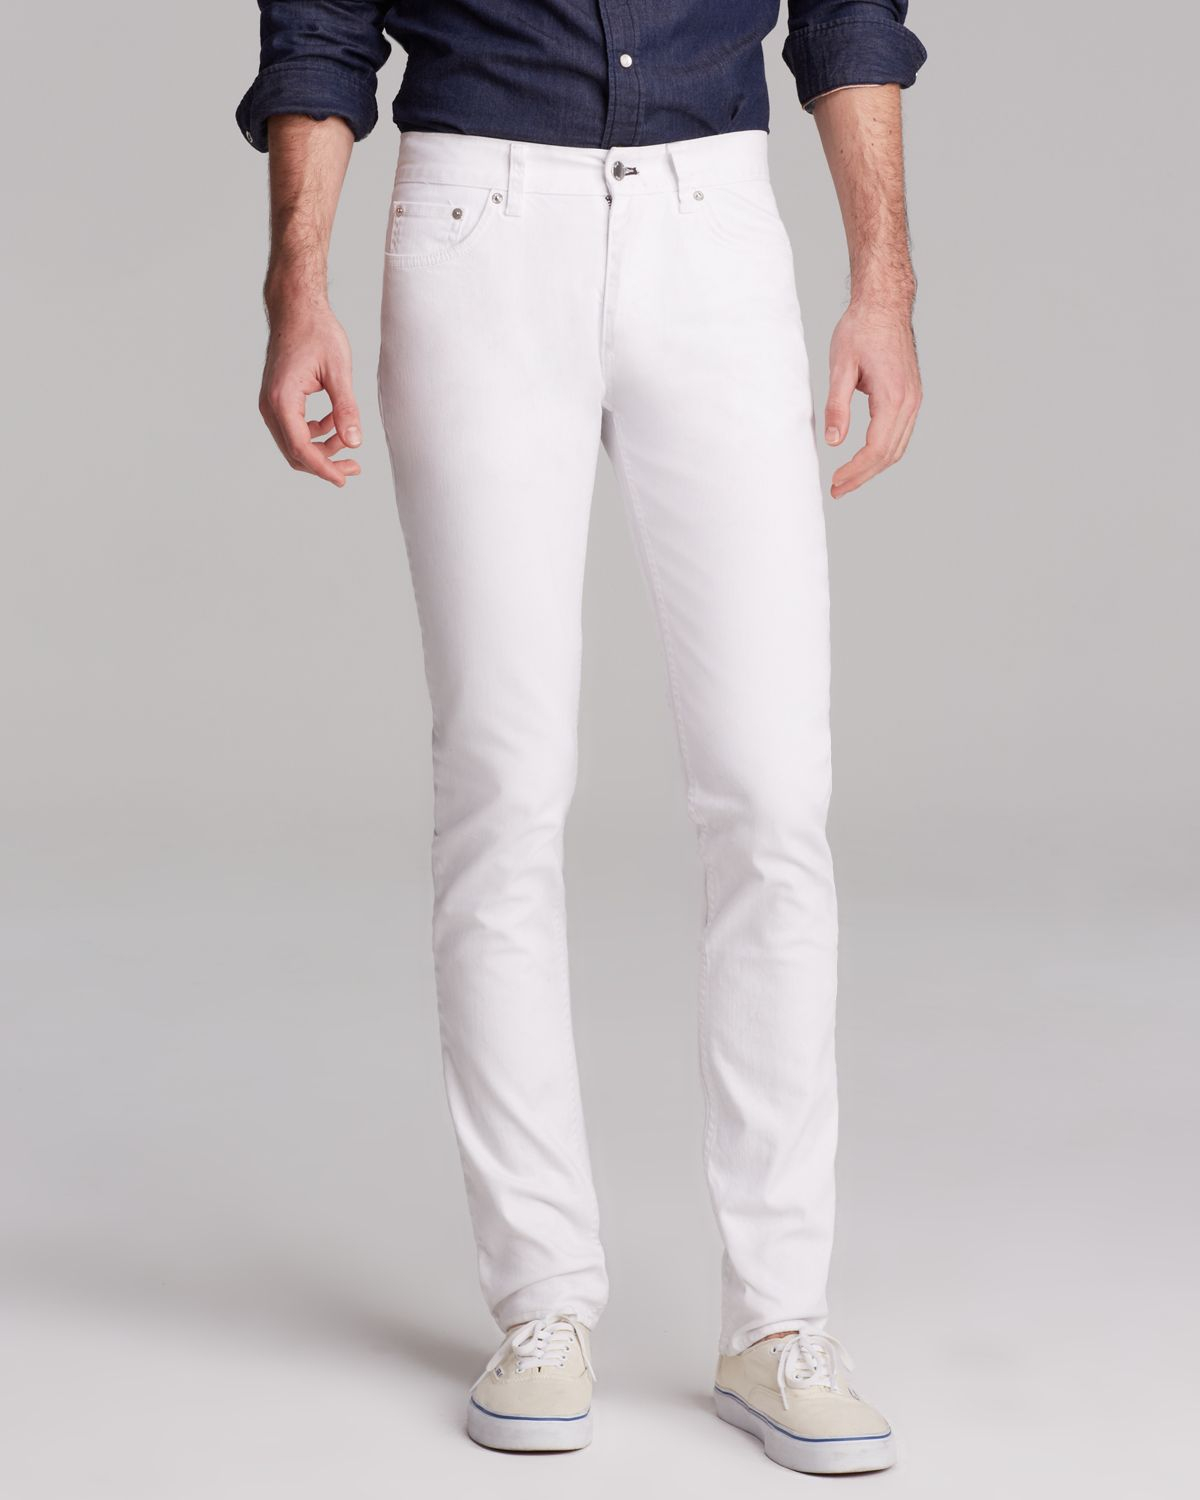 Blk dnm Jeans - Resin Coated 5 Slim Fit In Astor White in White ...